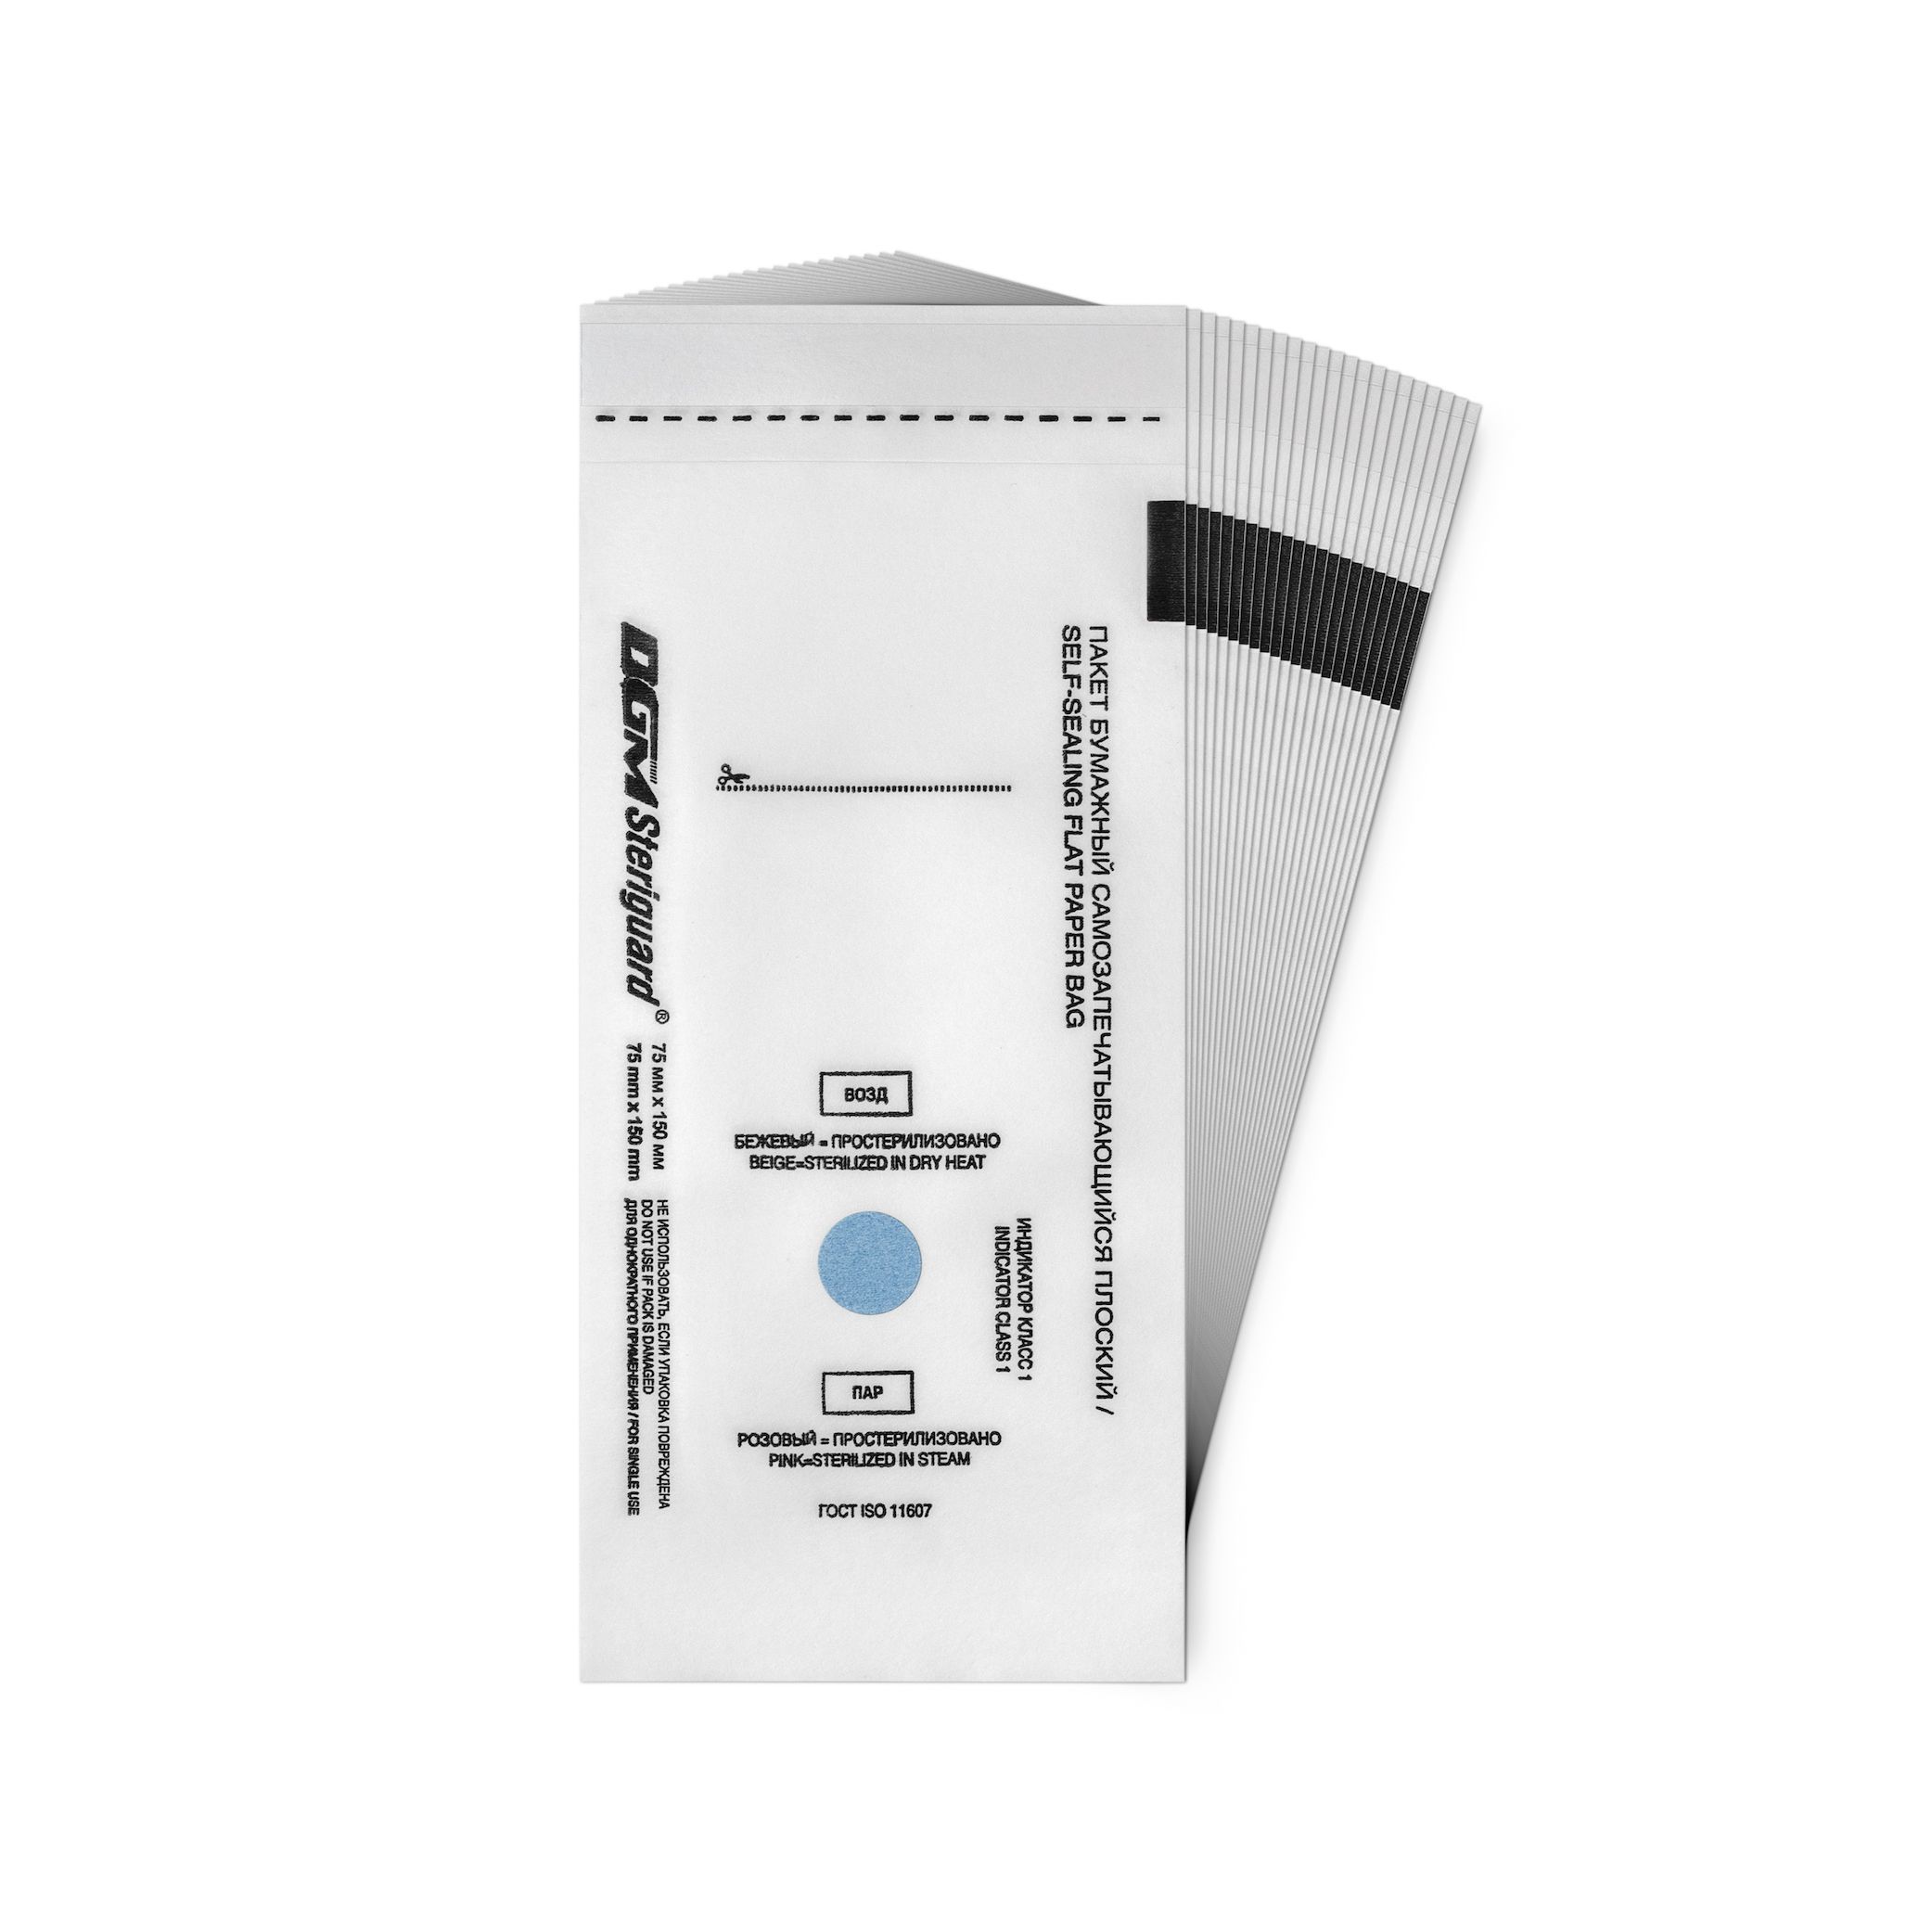 Пакет DGM Steriguard бумажный самозапечатывающийся 75х150мм, 100шт